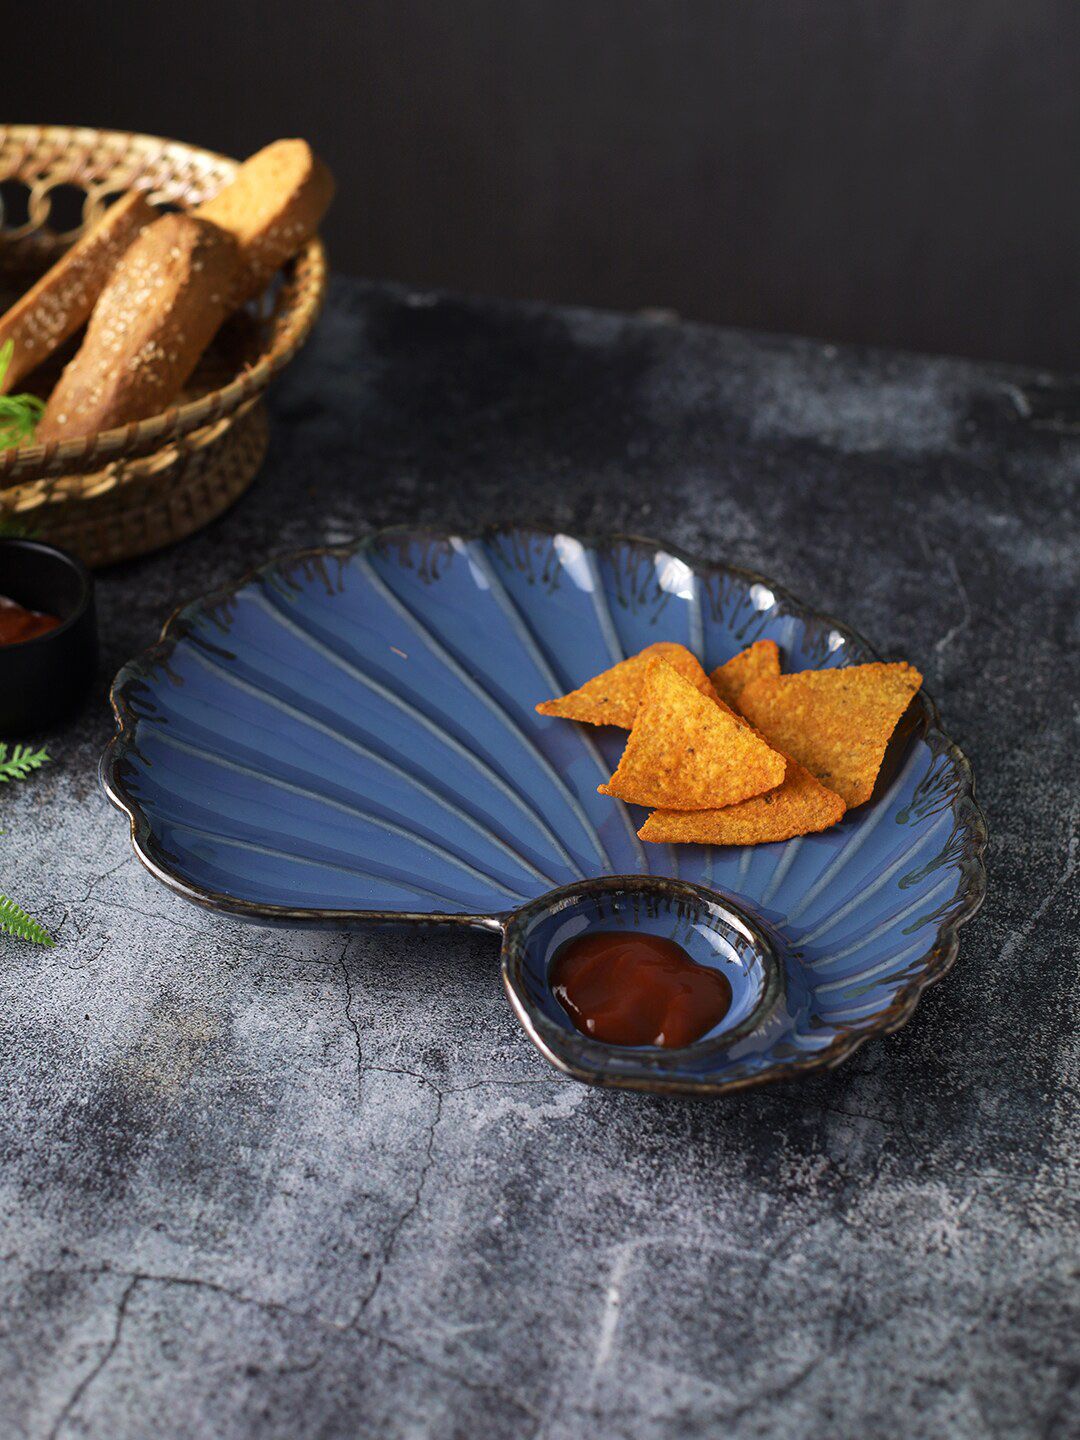 Aapno Rajasthan Blue Ceramic Platter Price in India